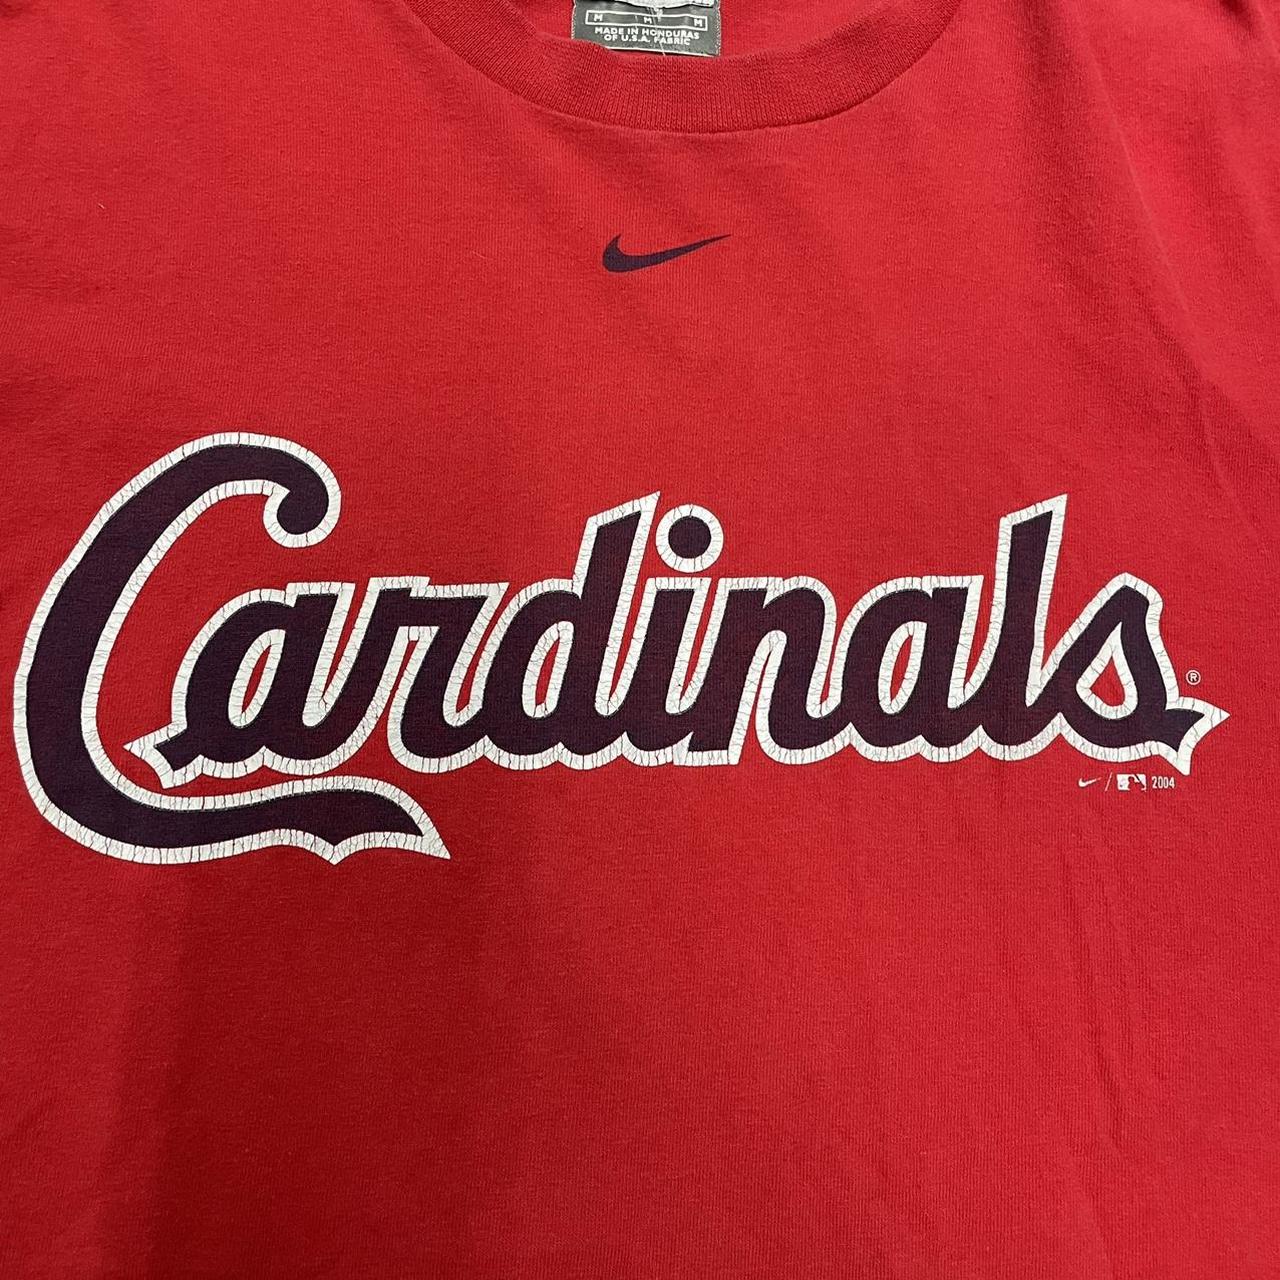 Vintage Louisville Cardinals Nike Team Kids Shirt - Depop